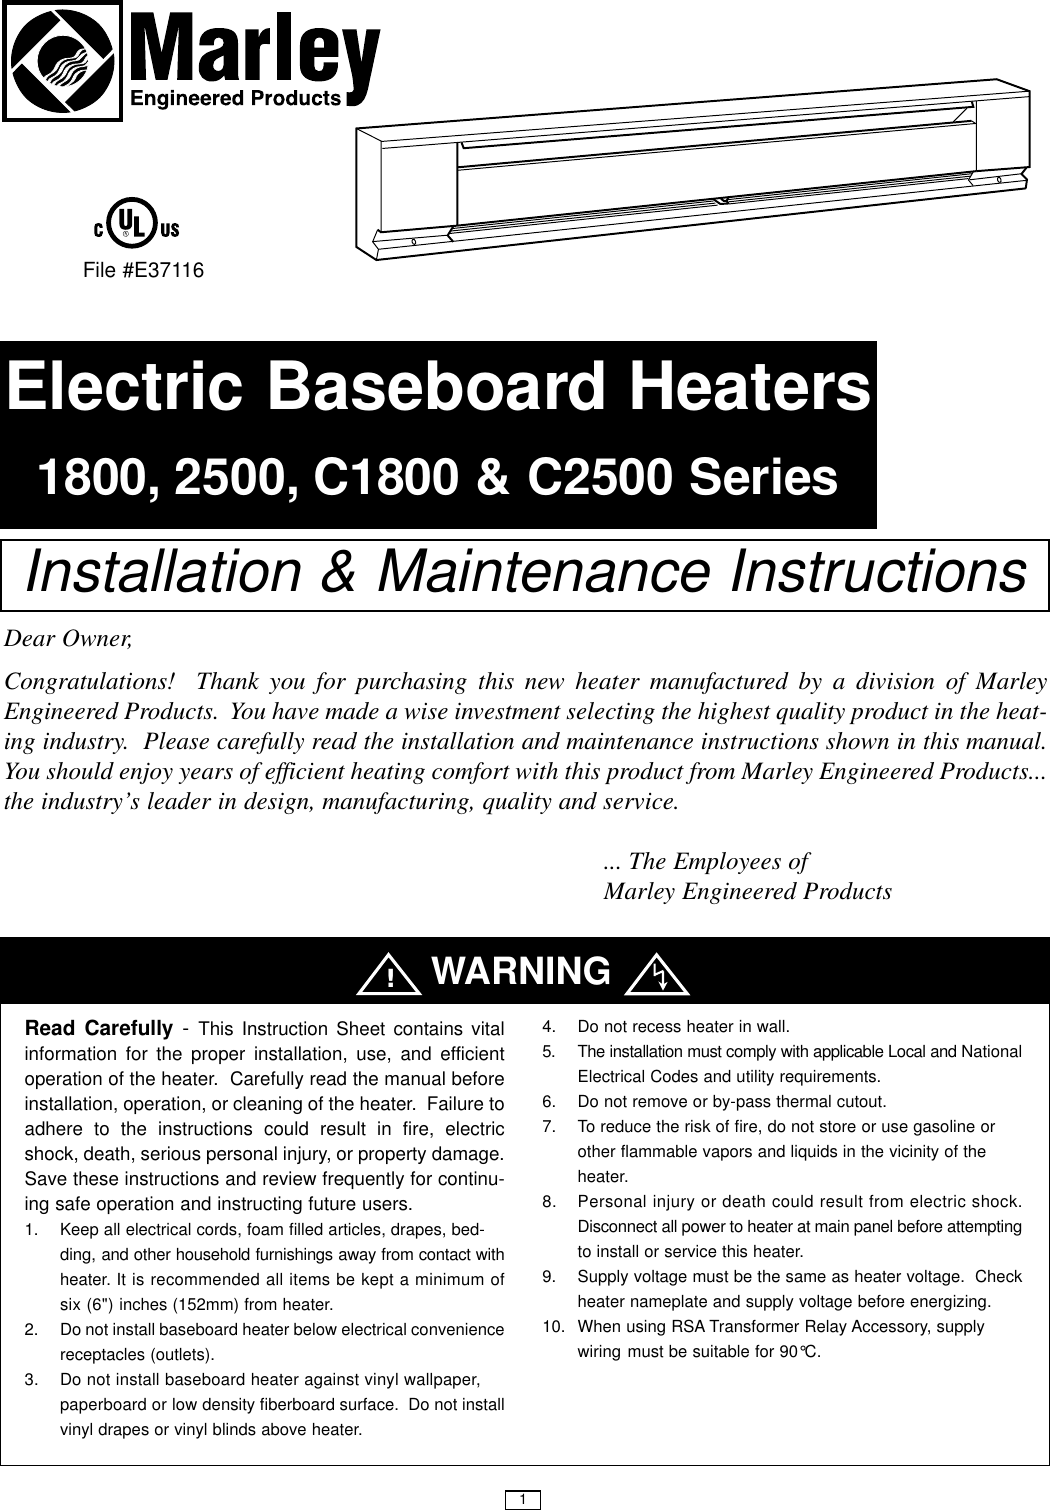 Marley Electric Baseboard Heater Wiring Diagram - Wiring Diagram Schemas